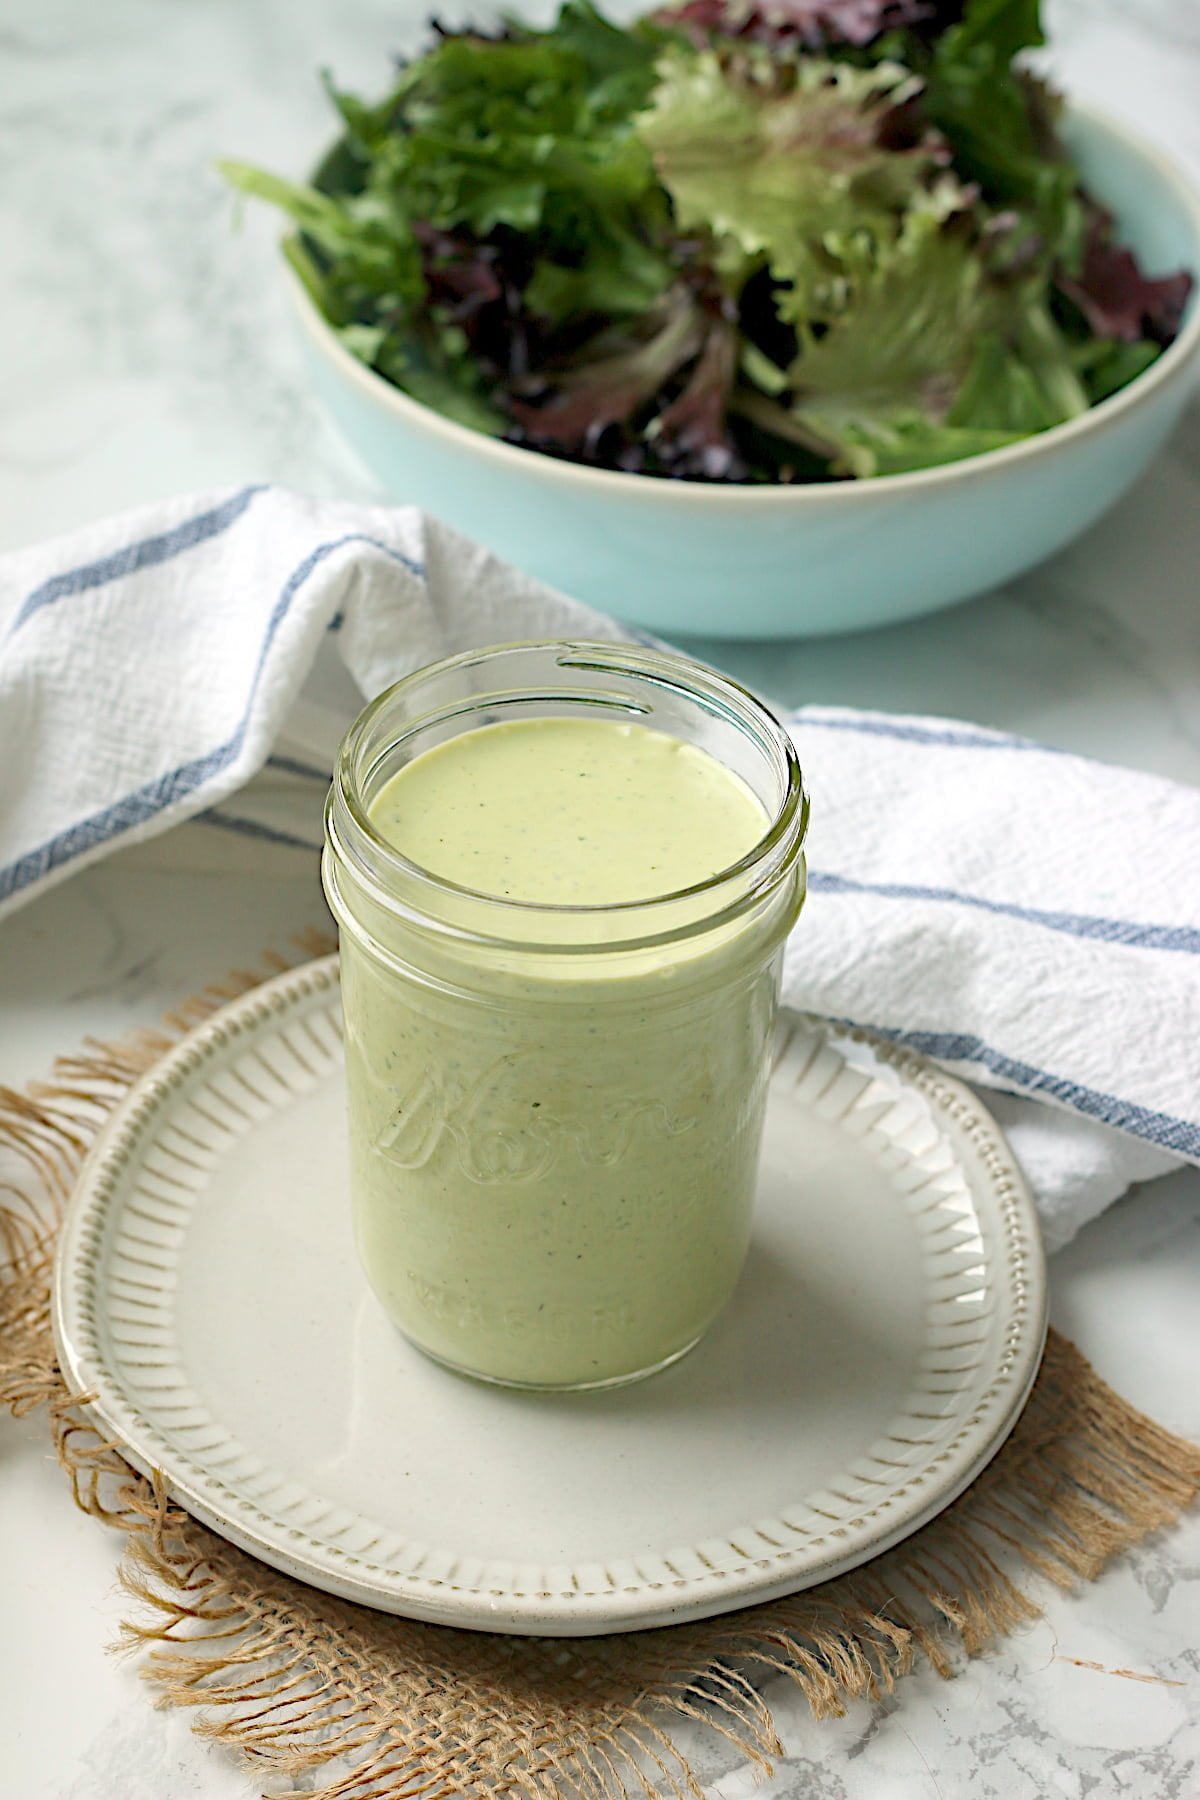 Homemade creamy pesto salad dressing in a jar.